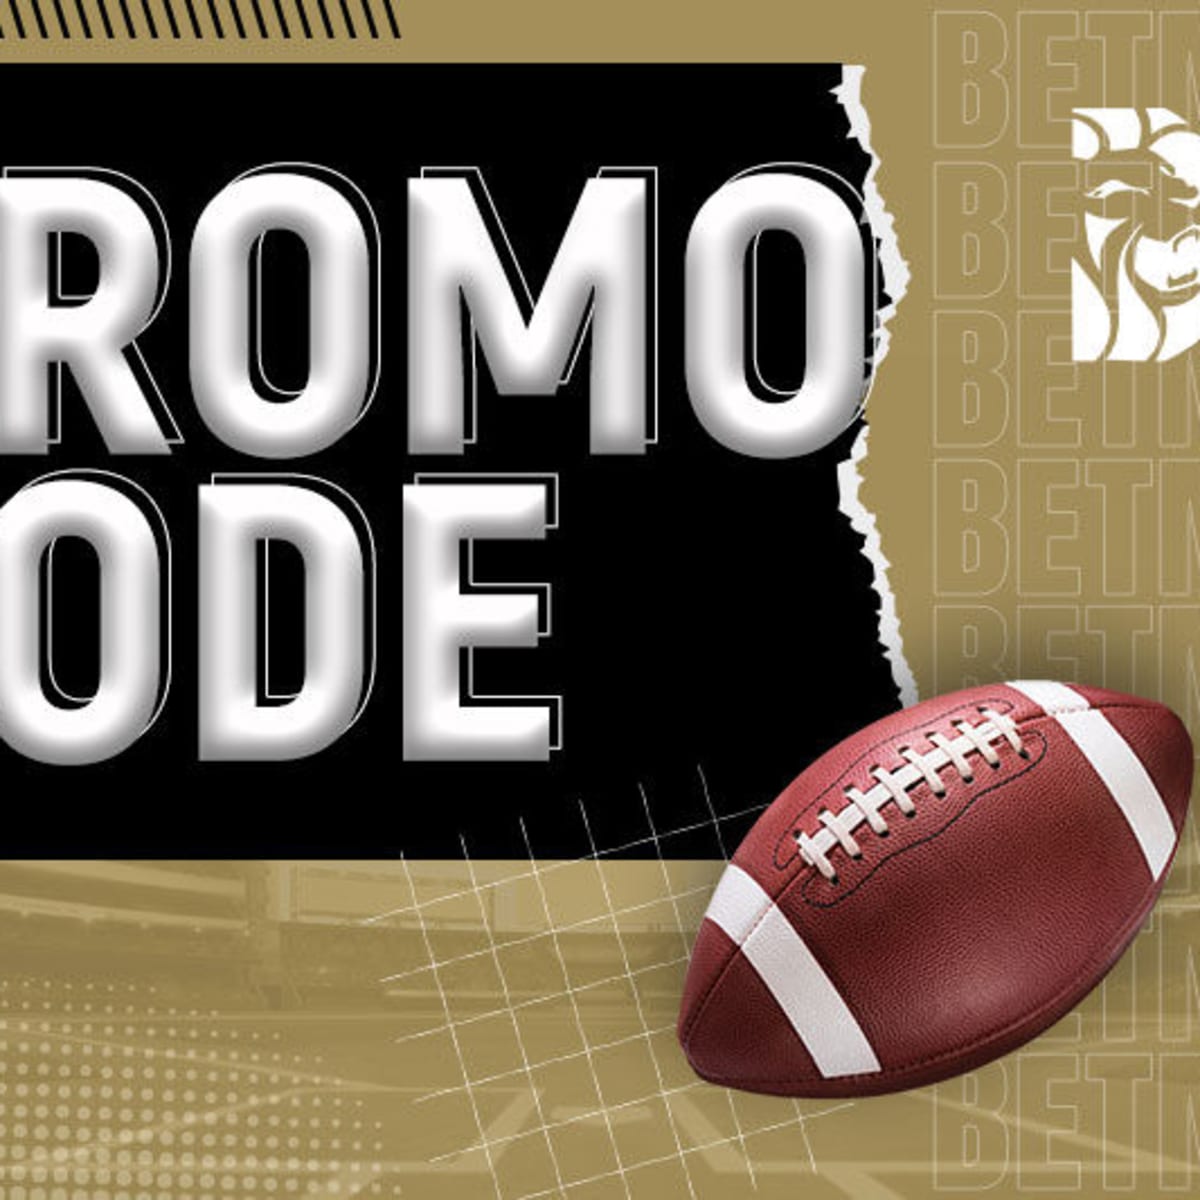 BetMGM NFL Bonus: Get $1,000 Promo for Jaguars-Chargers